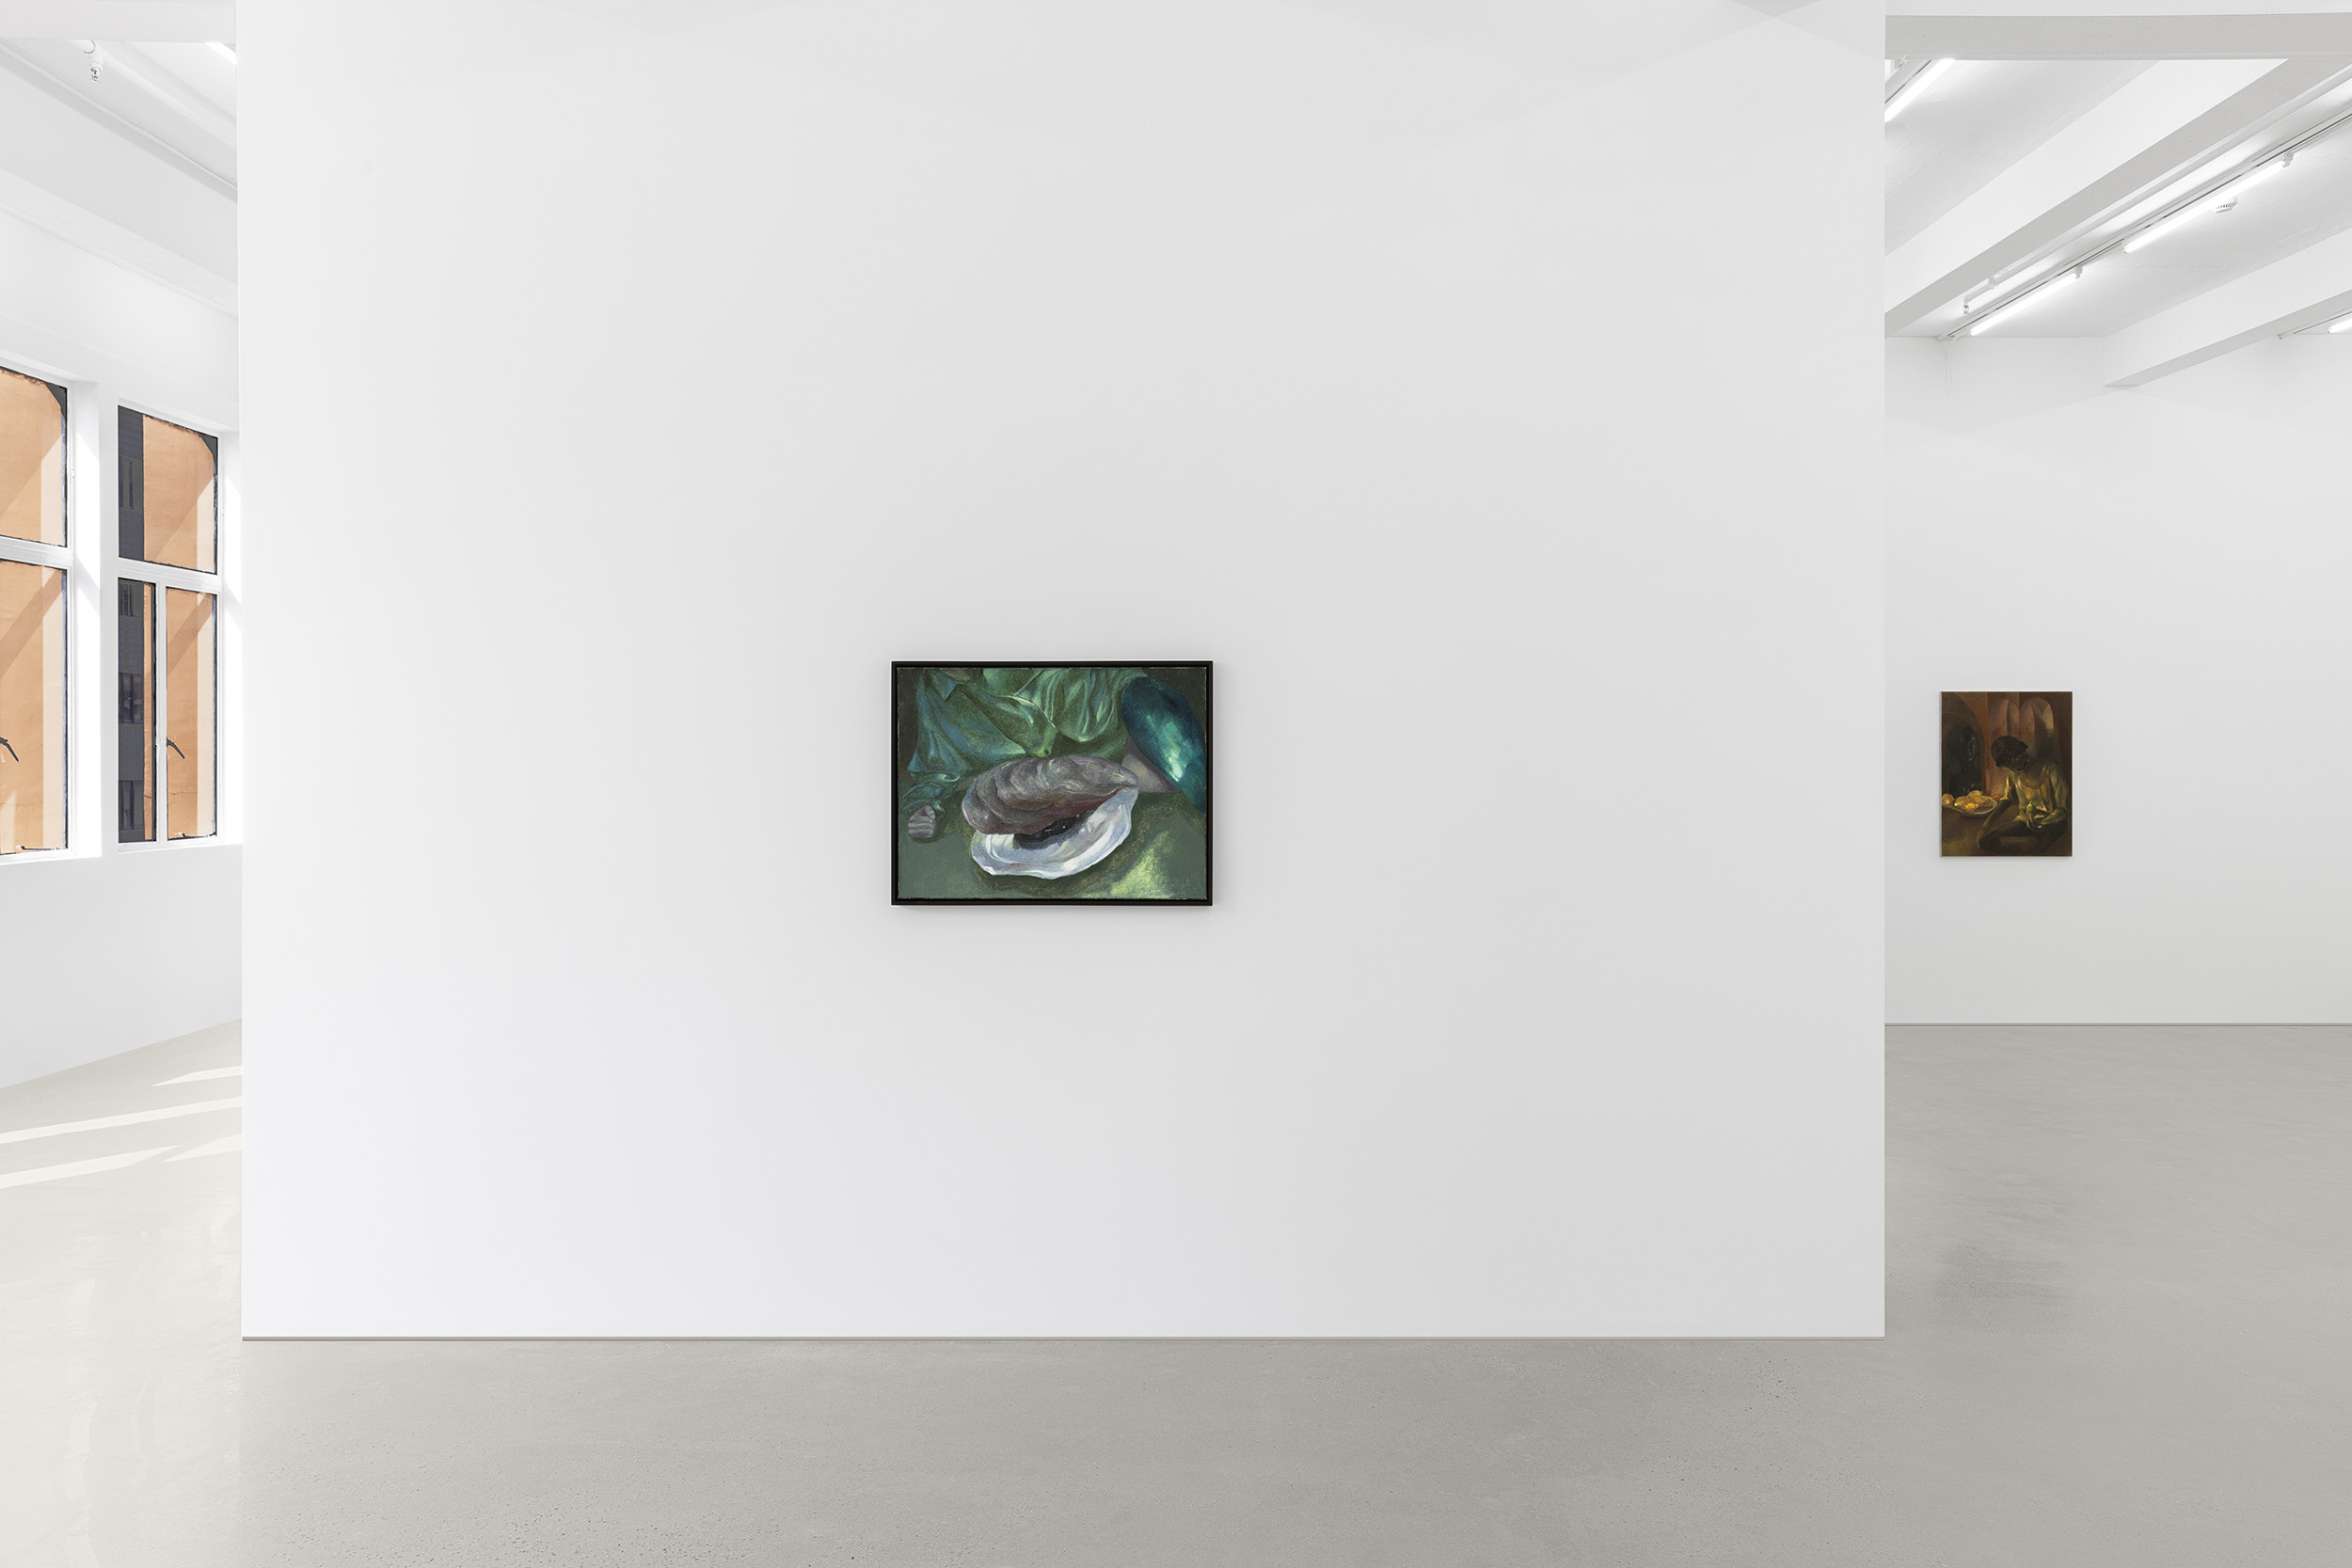 Alessandro Fogo solo exhibition installation view at Gallery Vacancy, 2023.